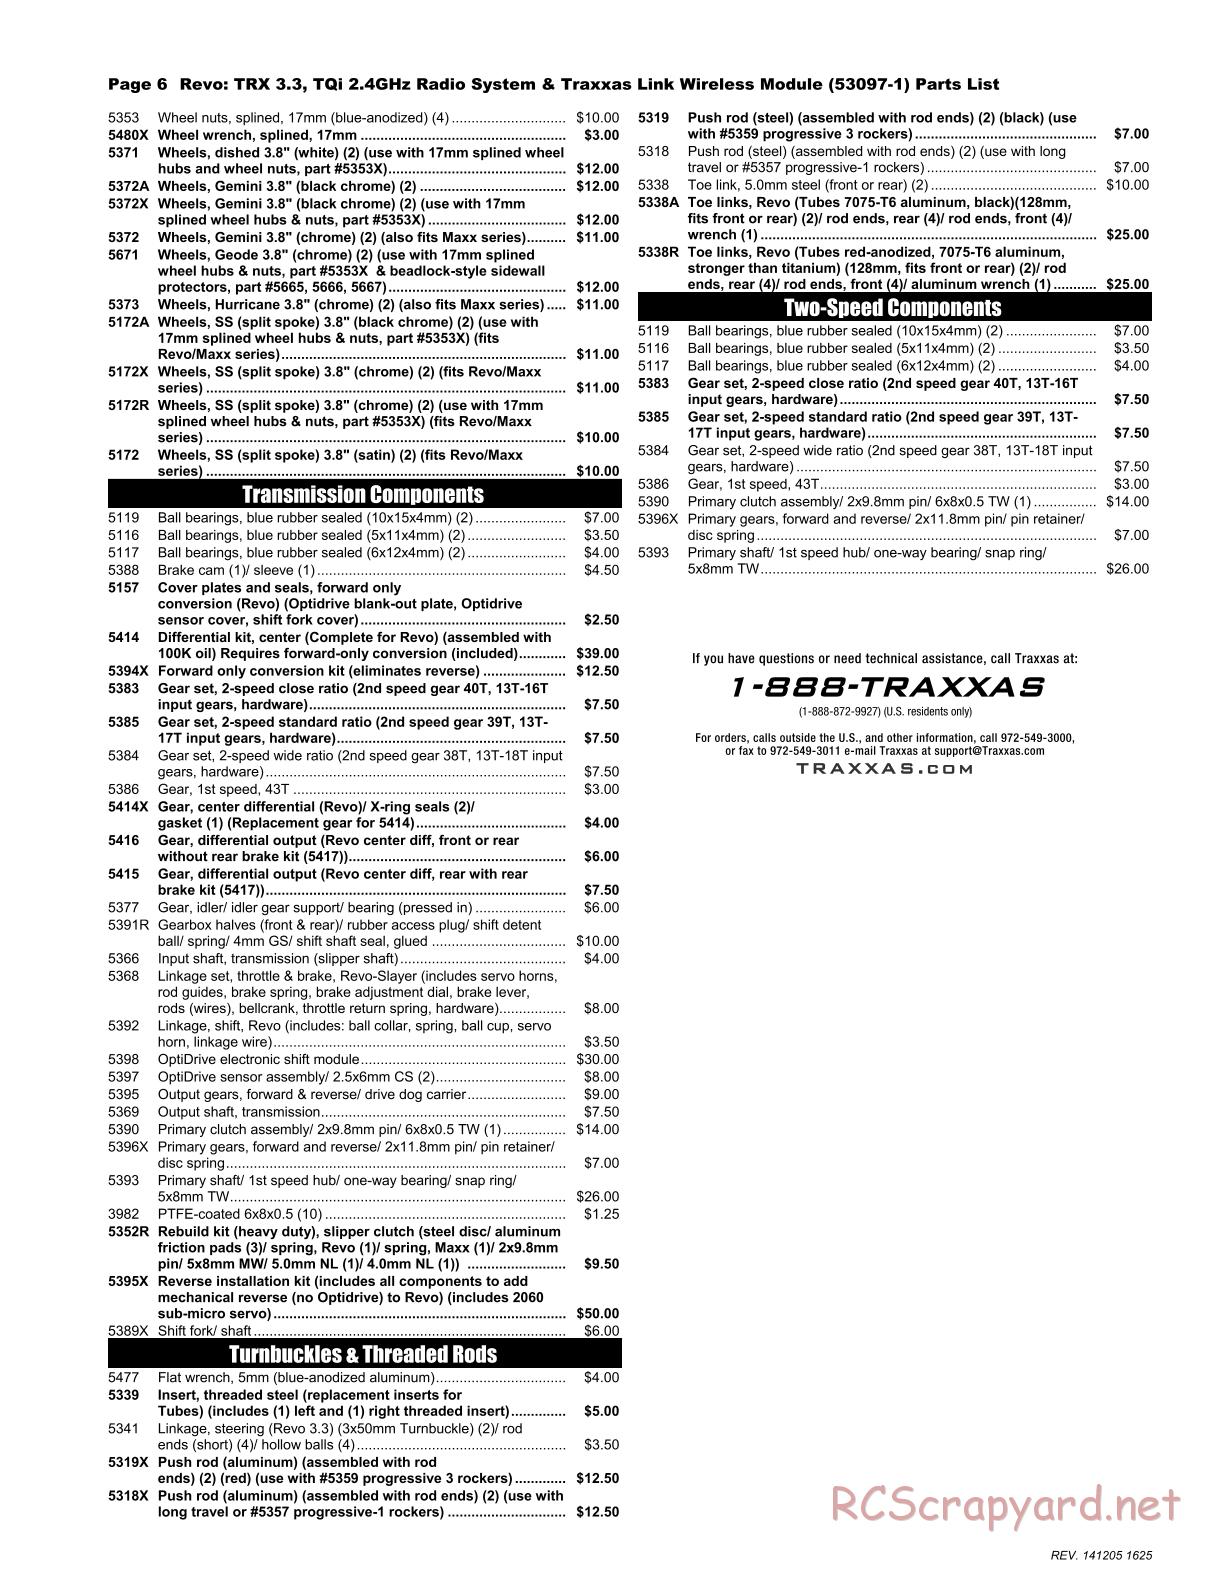 Traxxas - Revo 3.3 (2015) - Parts List - Page 6